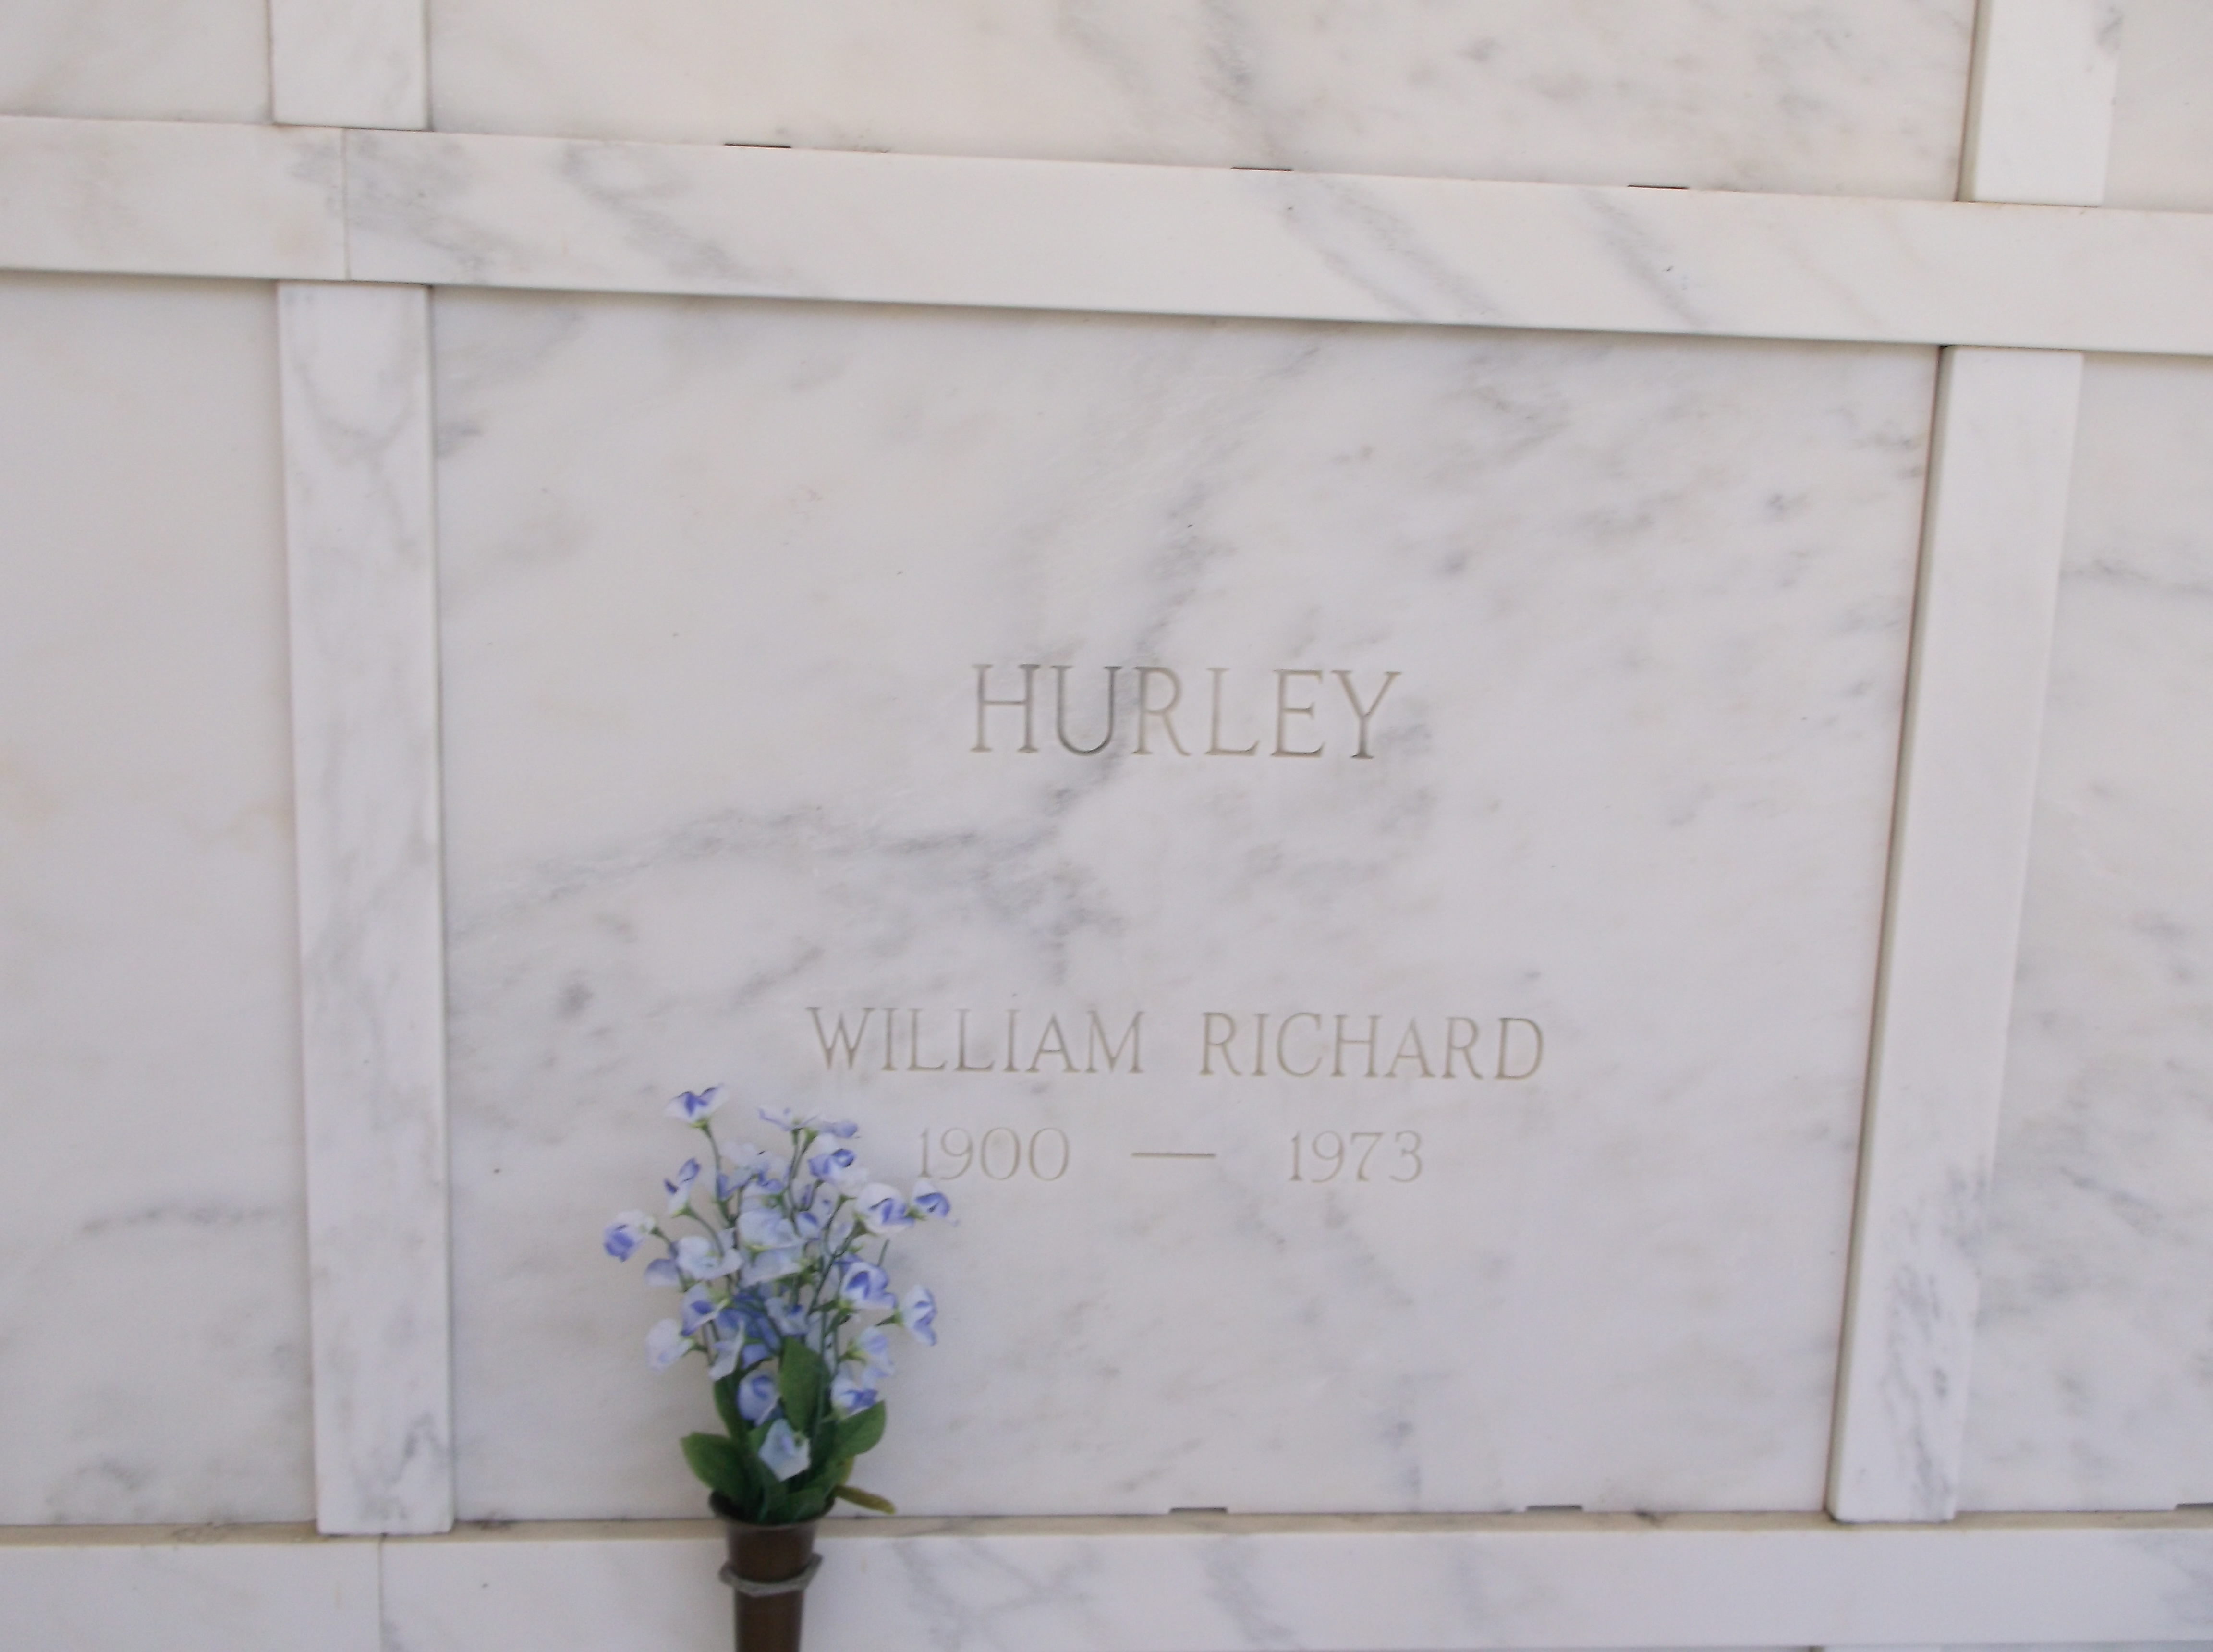 William Richard Hurley